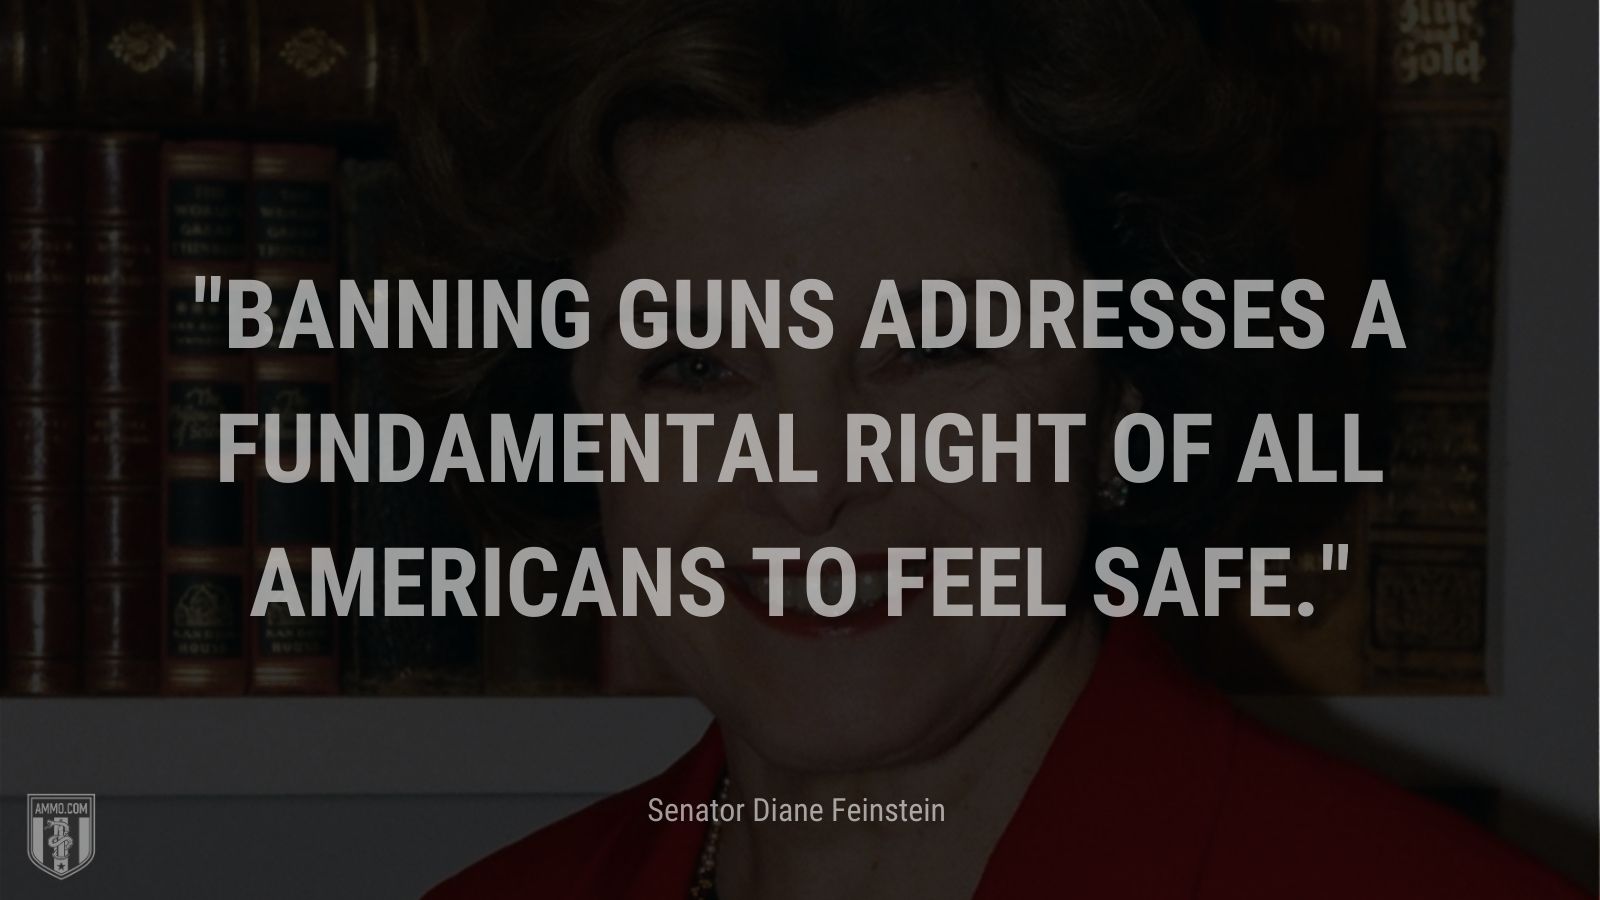 “Banning guns addresses a fundamental right of all Americans to feel safe.” -Sen. Dianne Feinstein